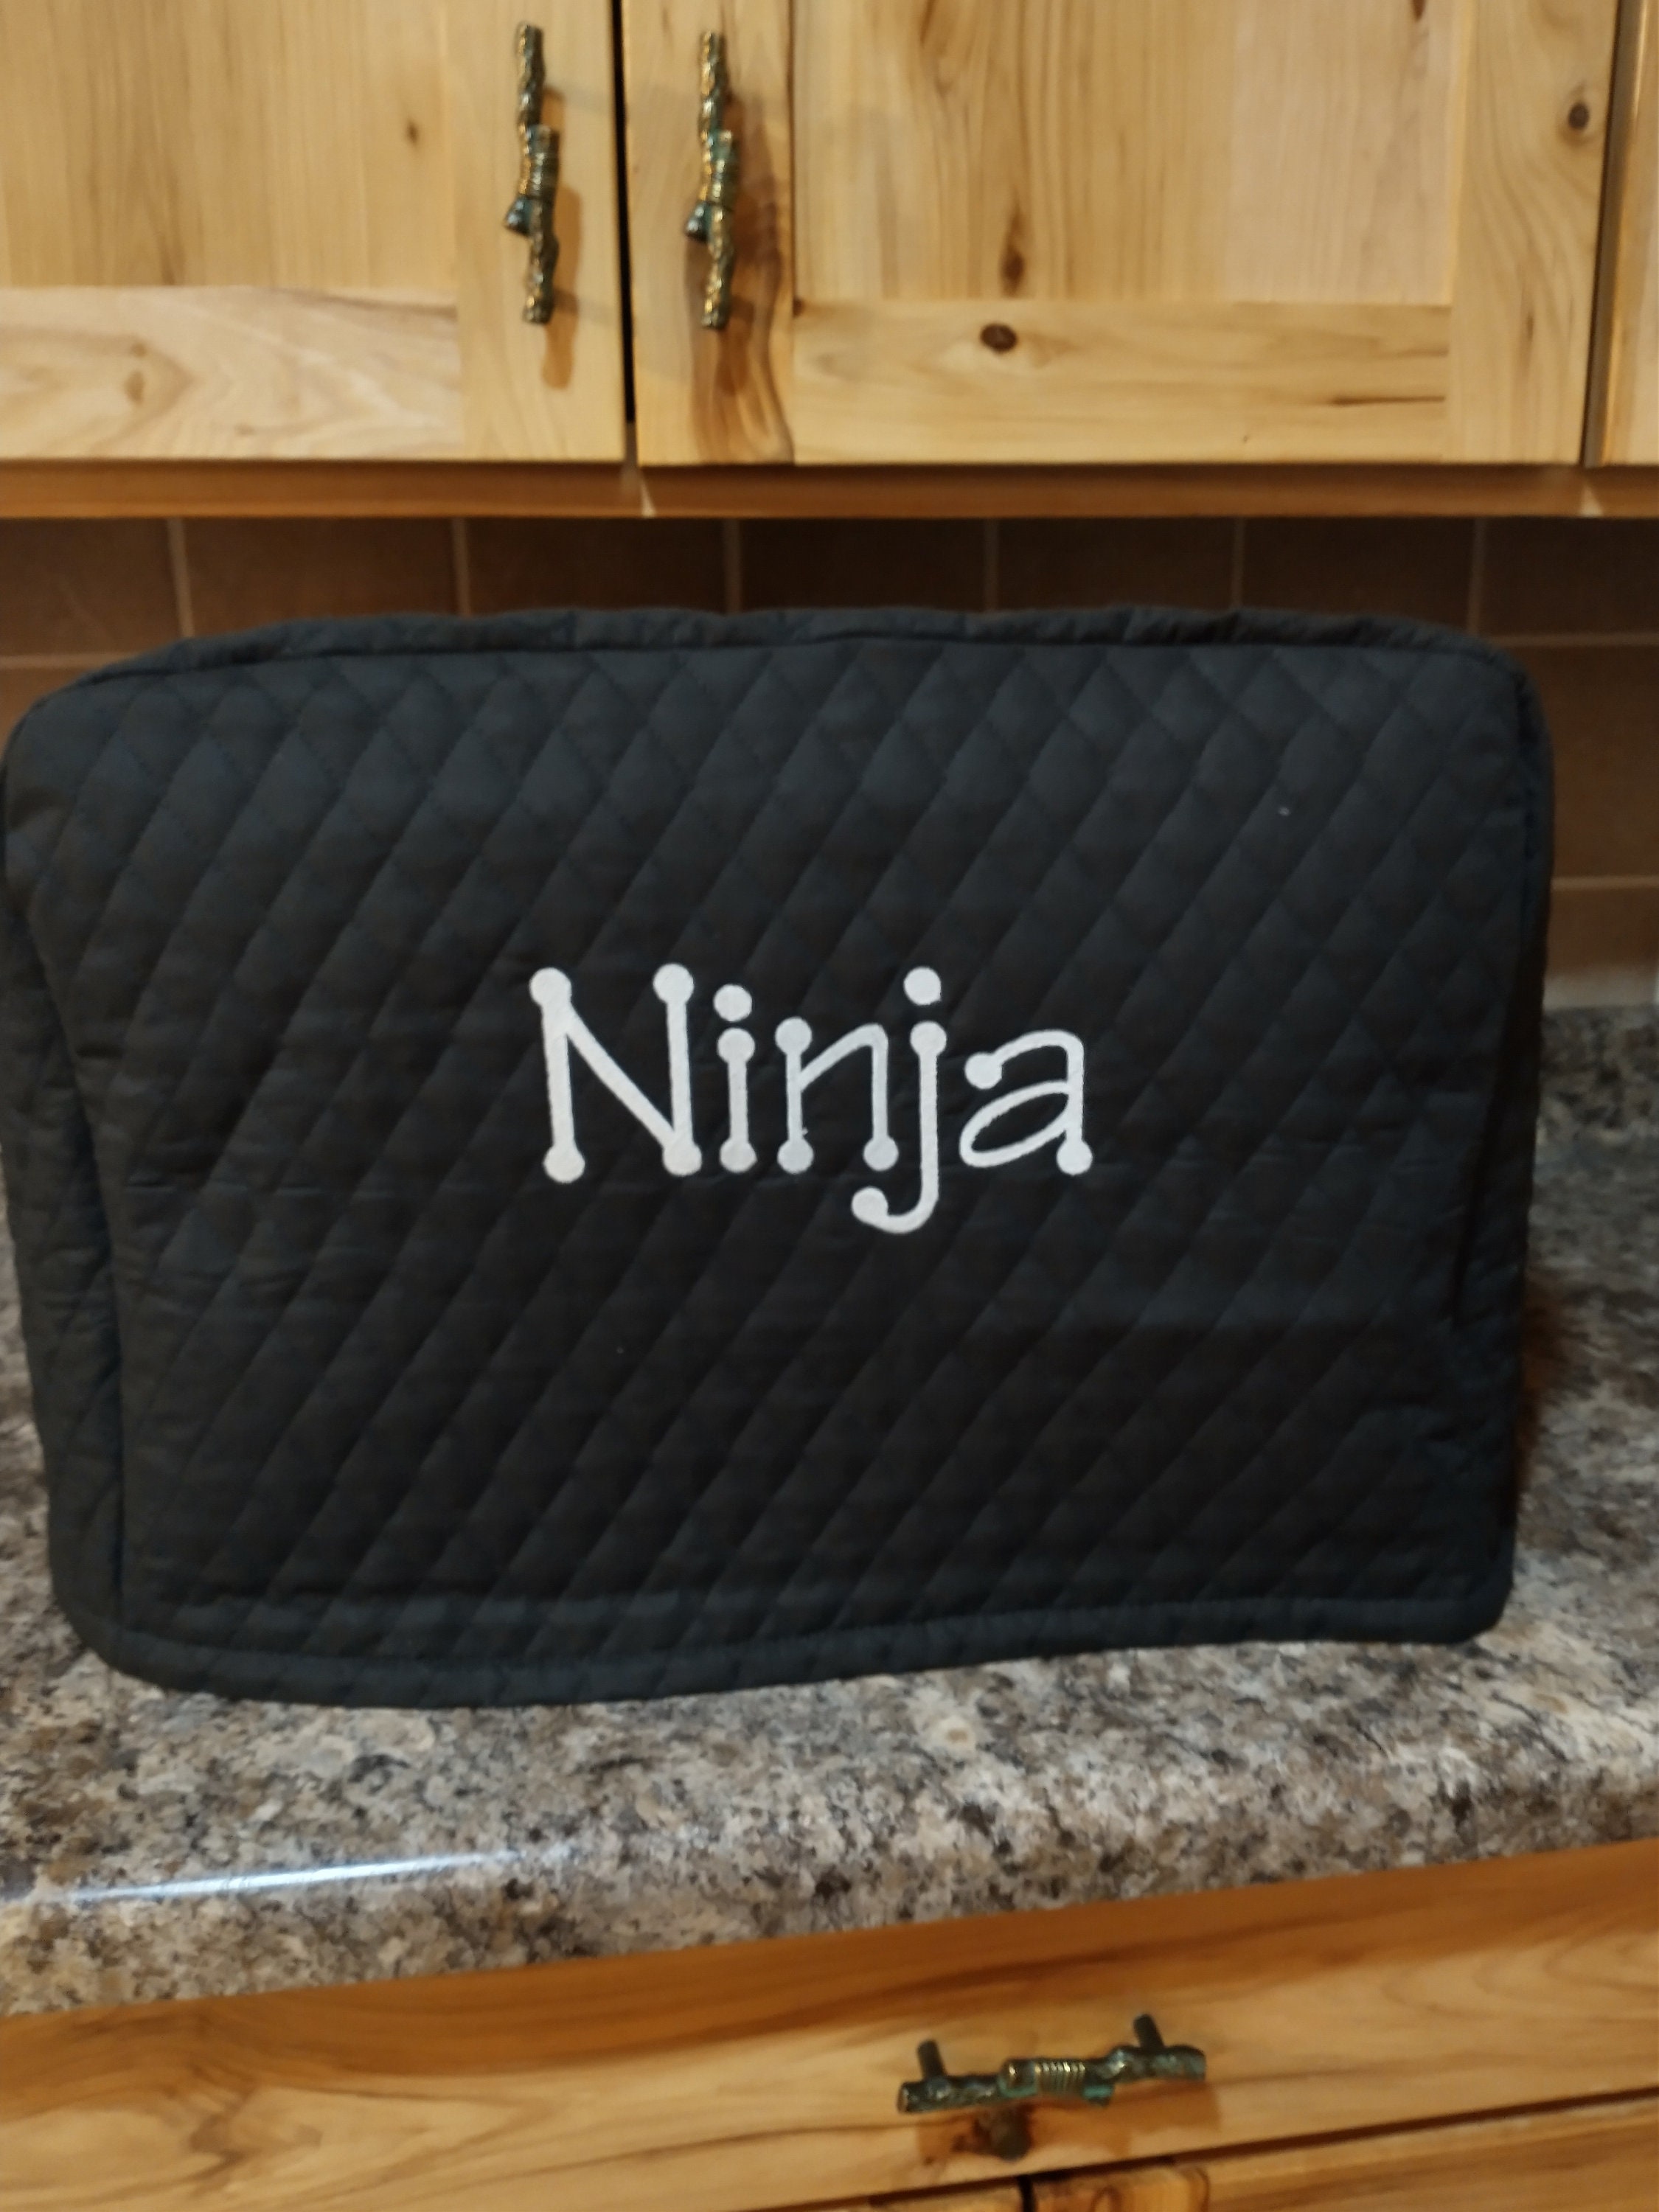 Ninja Foodi 6.5 Quart QT Wrap Sticker Skin Cover Accessories Wraps Fit Ninja  Foodi 6.5 Quart QT Mdl: OP302 107 Black White Floral 